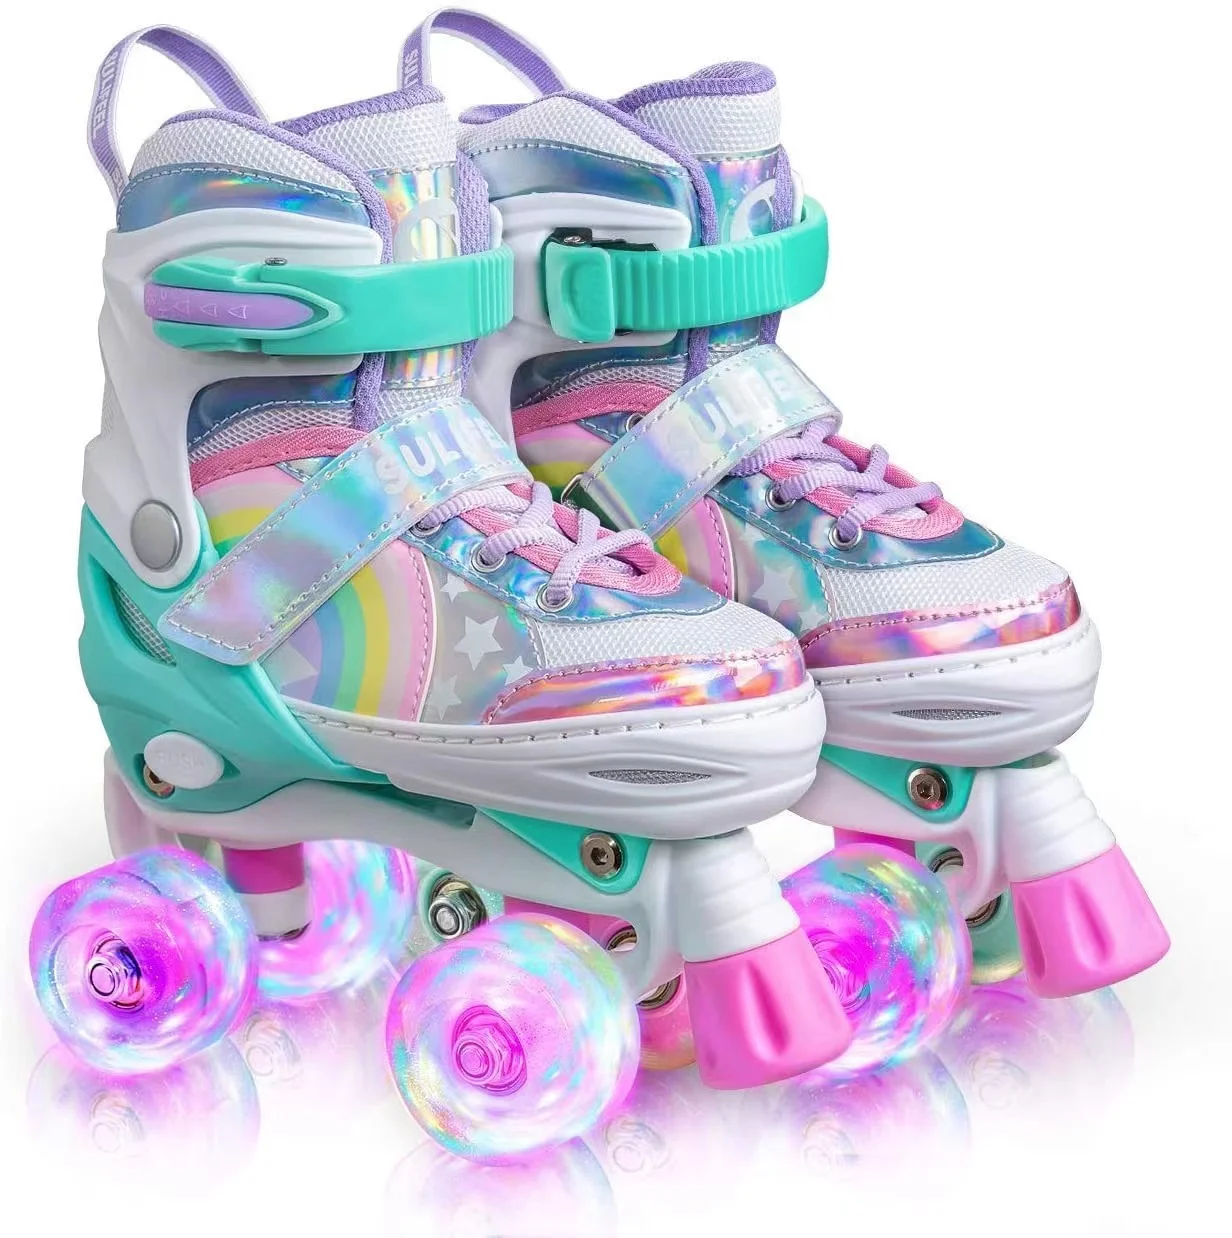 High Quality Girls Boys Kids Roller Skates Shoes Patins Sliding Quad 4 Wheels 2 Row Balanced Safety Beginner's Skating Sneakers